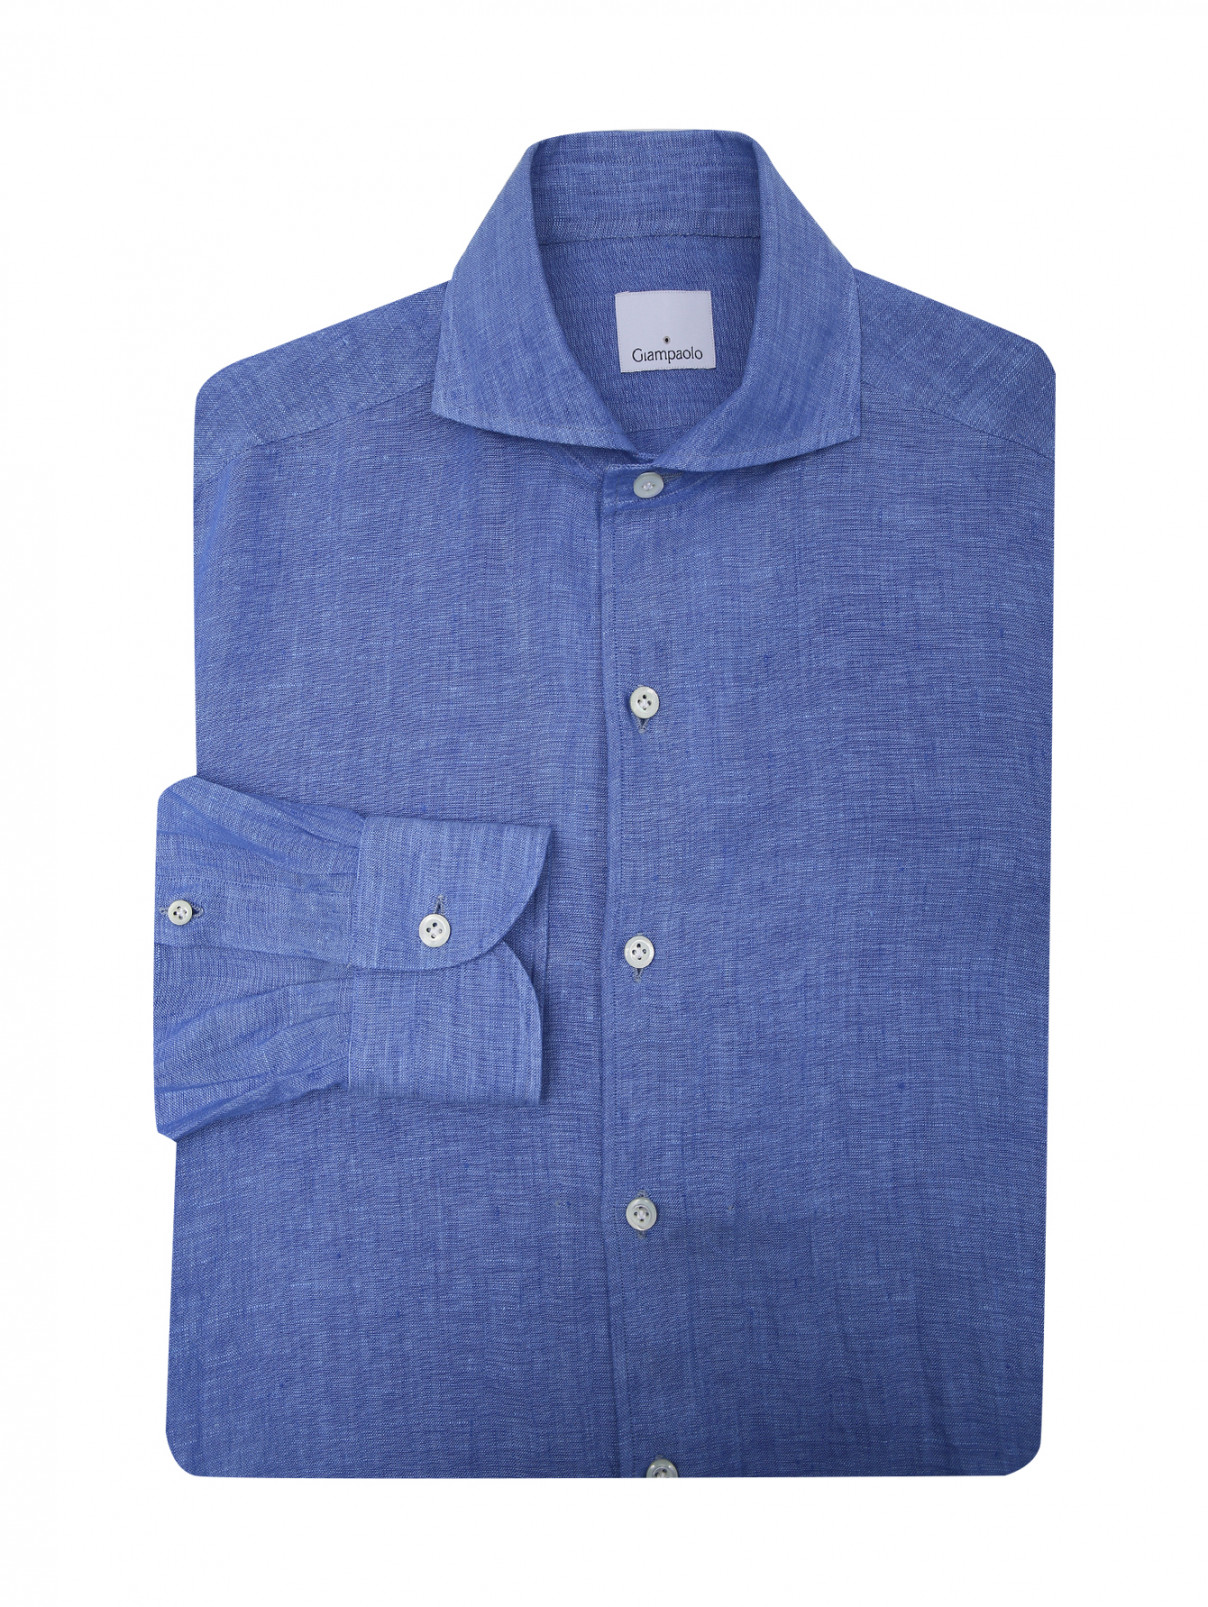 Рубашка из льна Giampaolo  –  Общий вид  – Цвет:  Синий